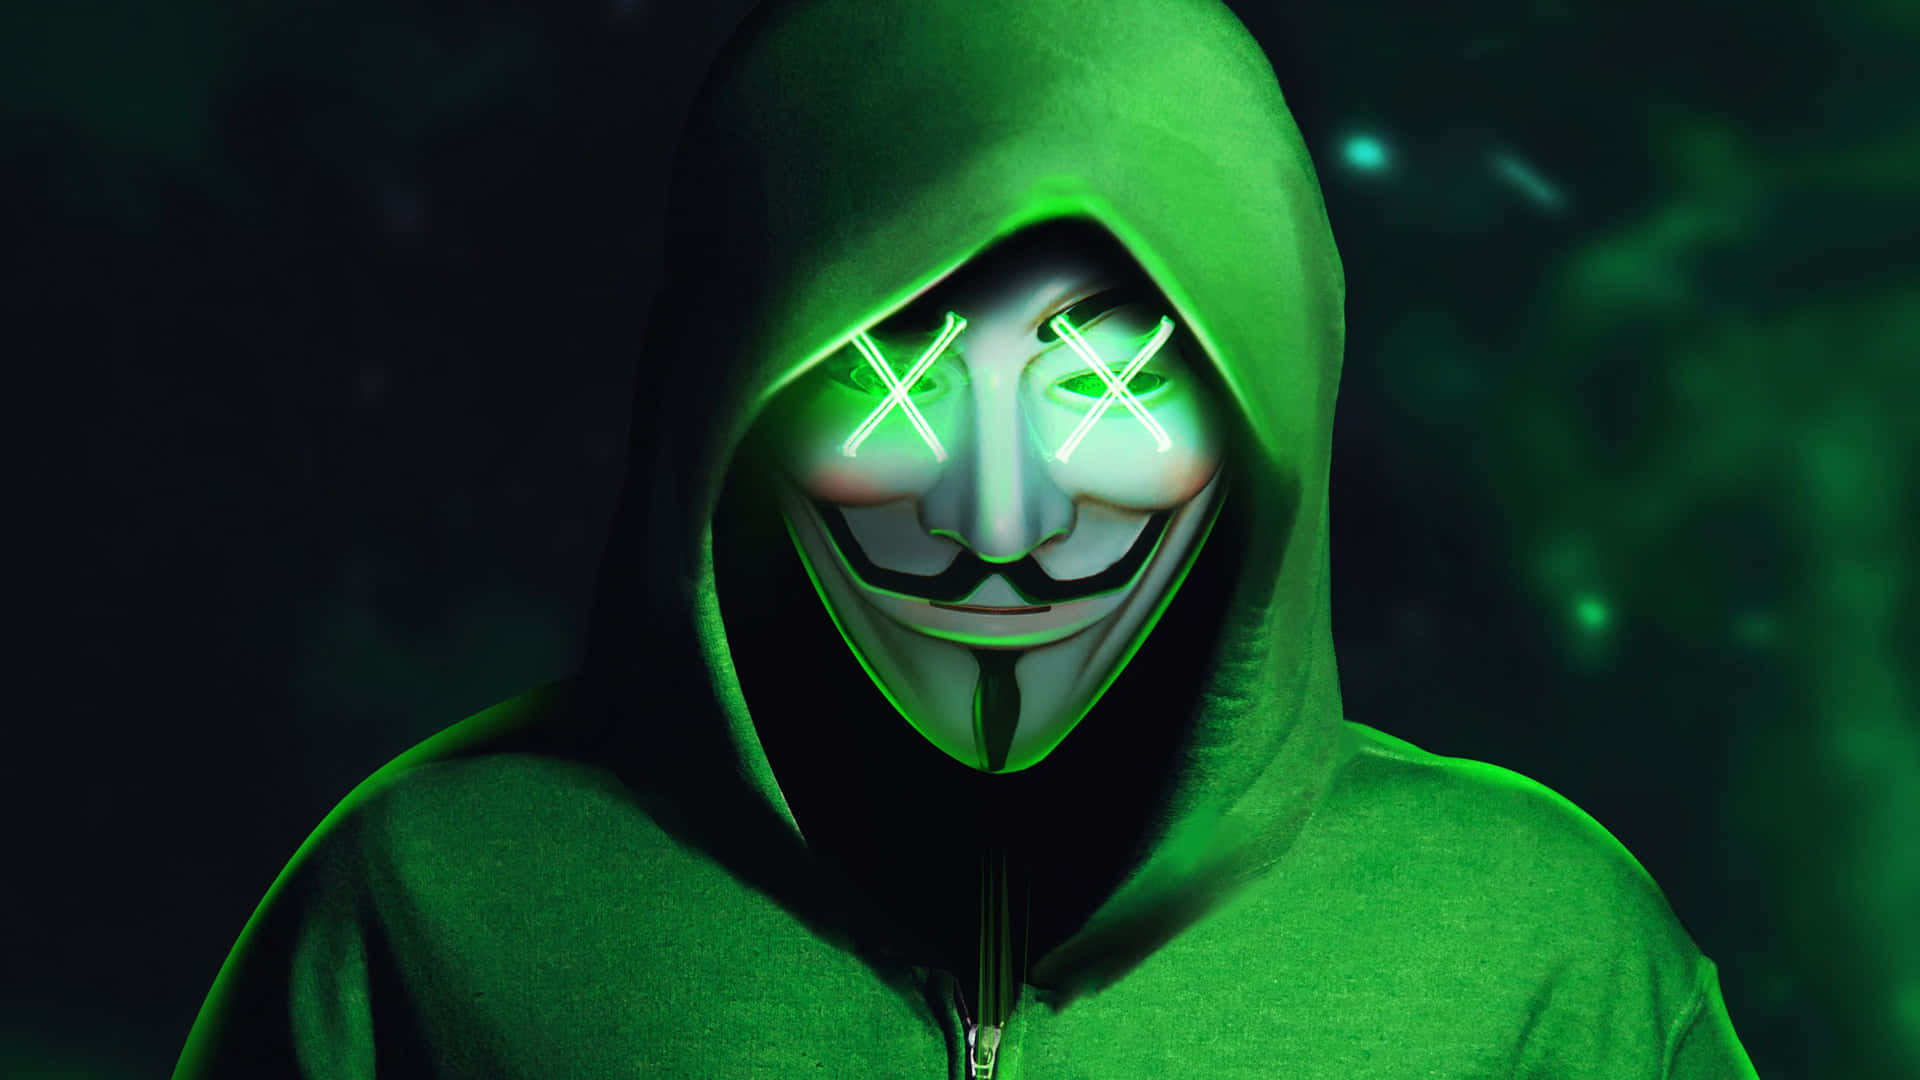 Green 4k Mask Anonymous Hacker Wallpaper